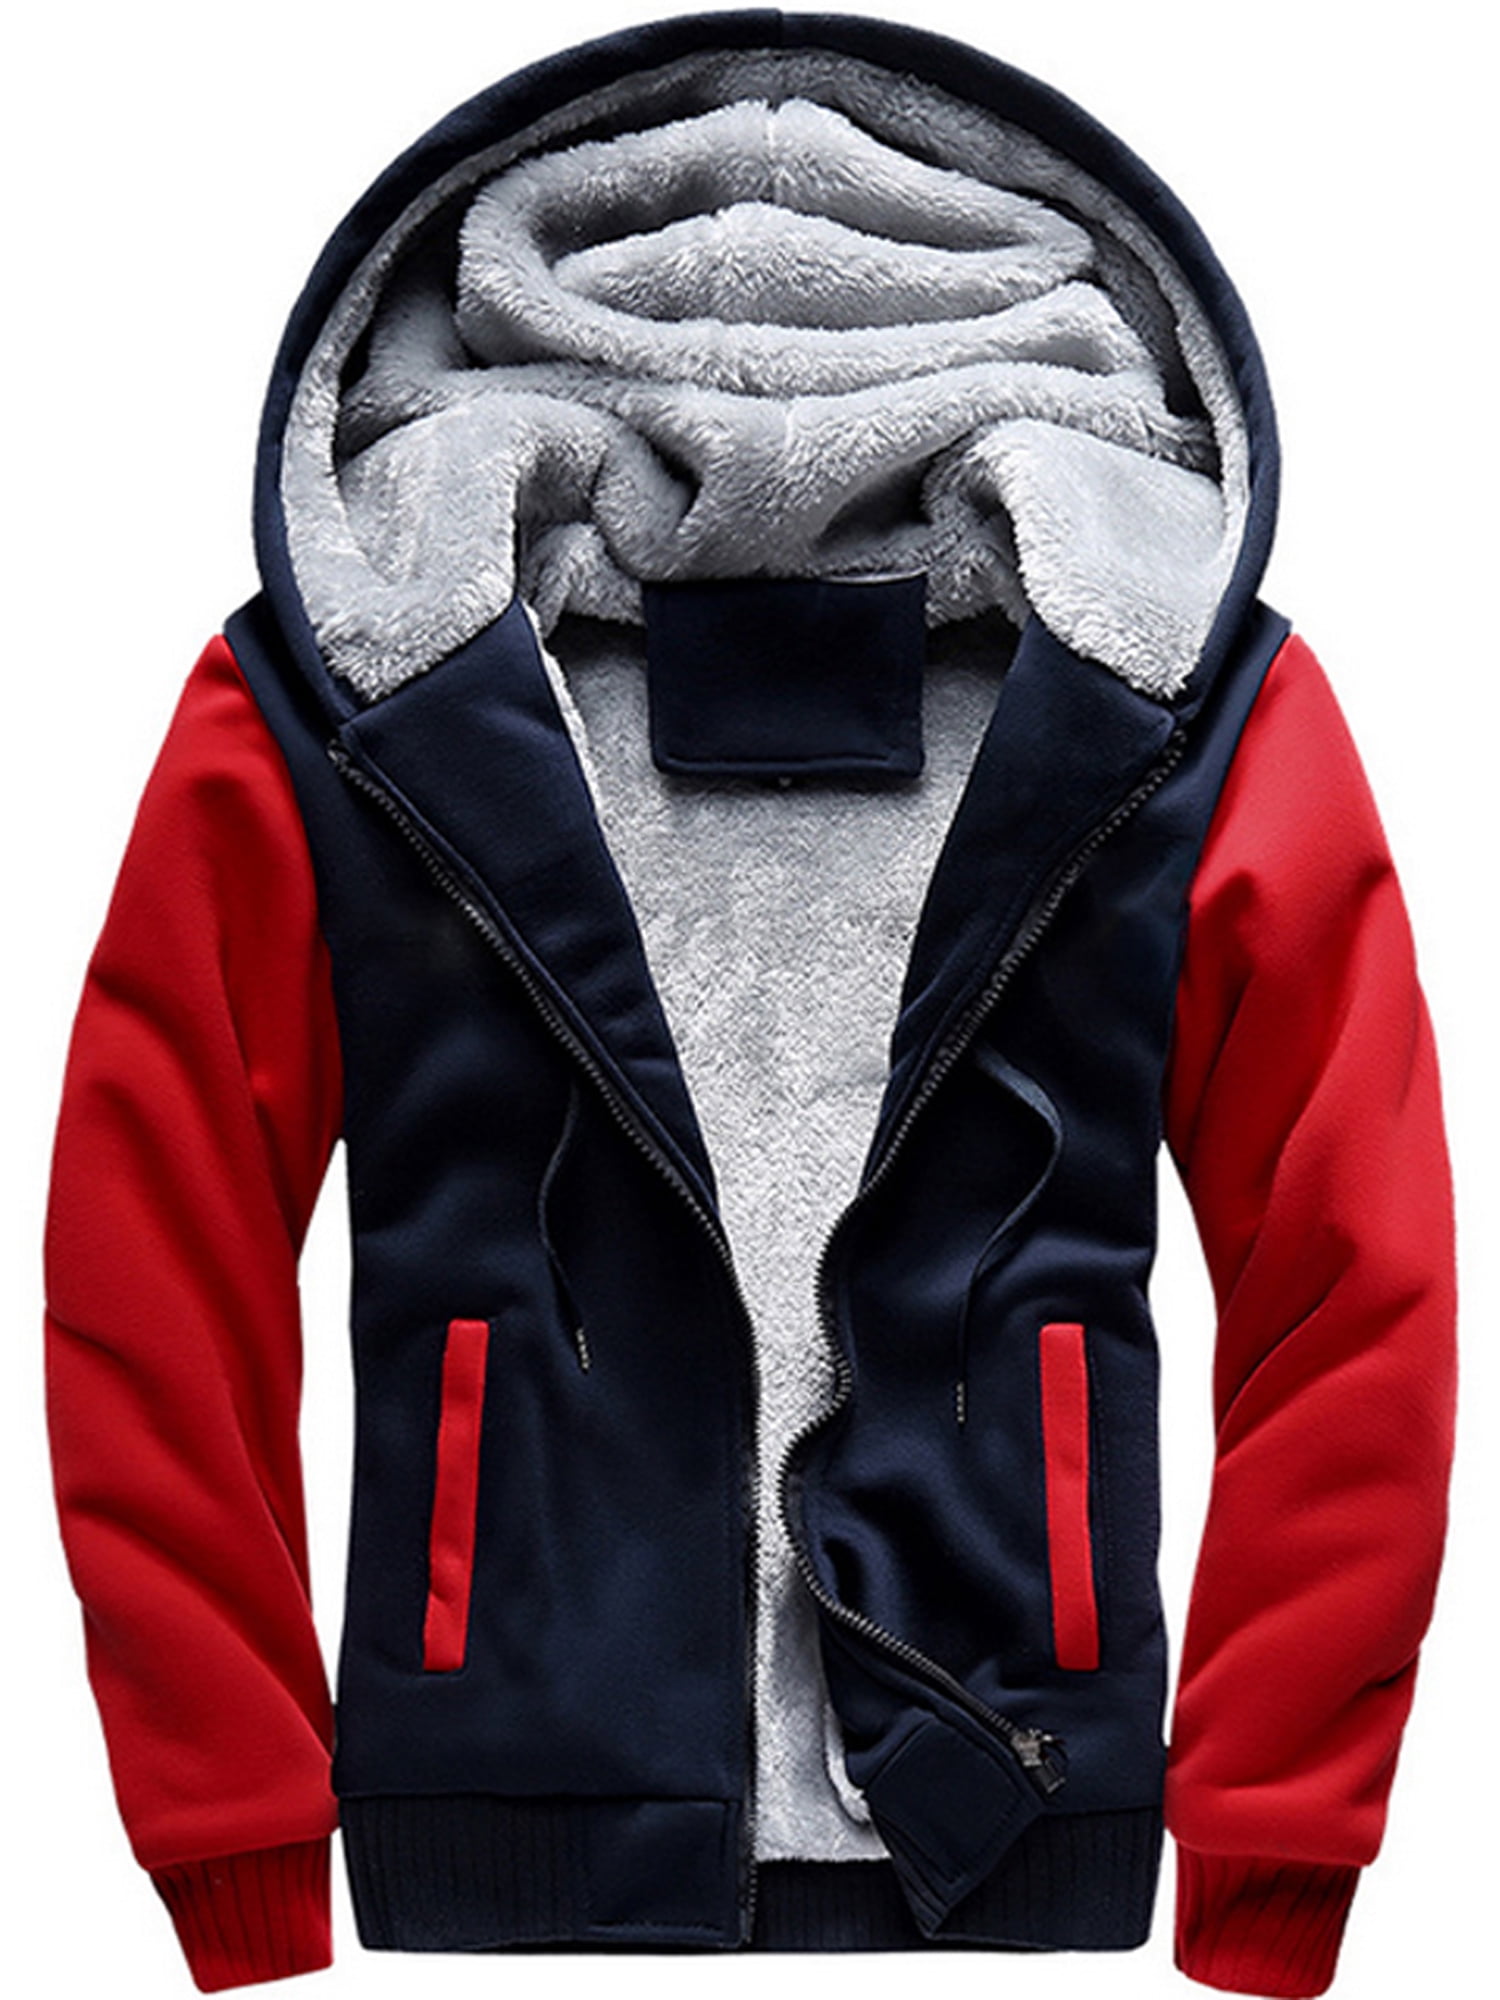 Men's Winter Warm Fleece Lined Hoodie Jacket Long Coat Zip Up Hooded Outerwear